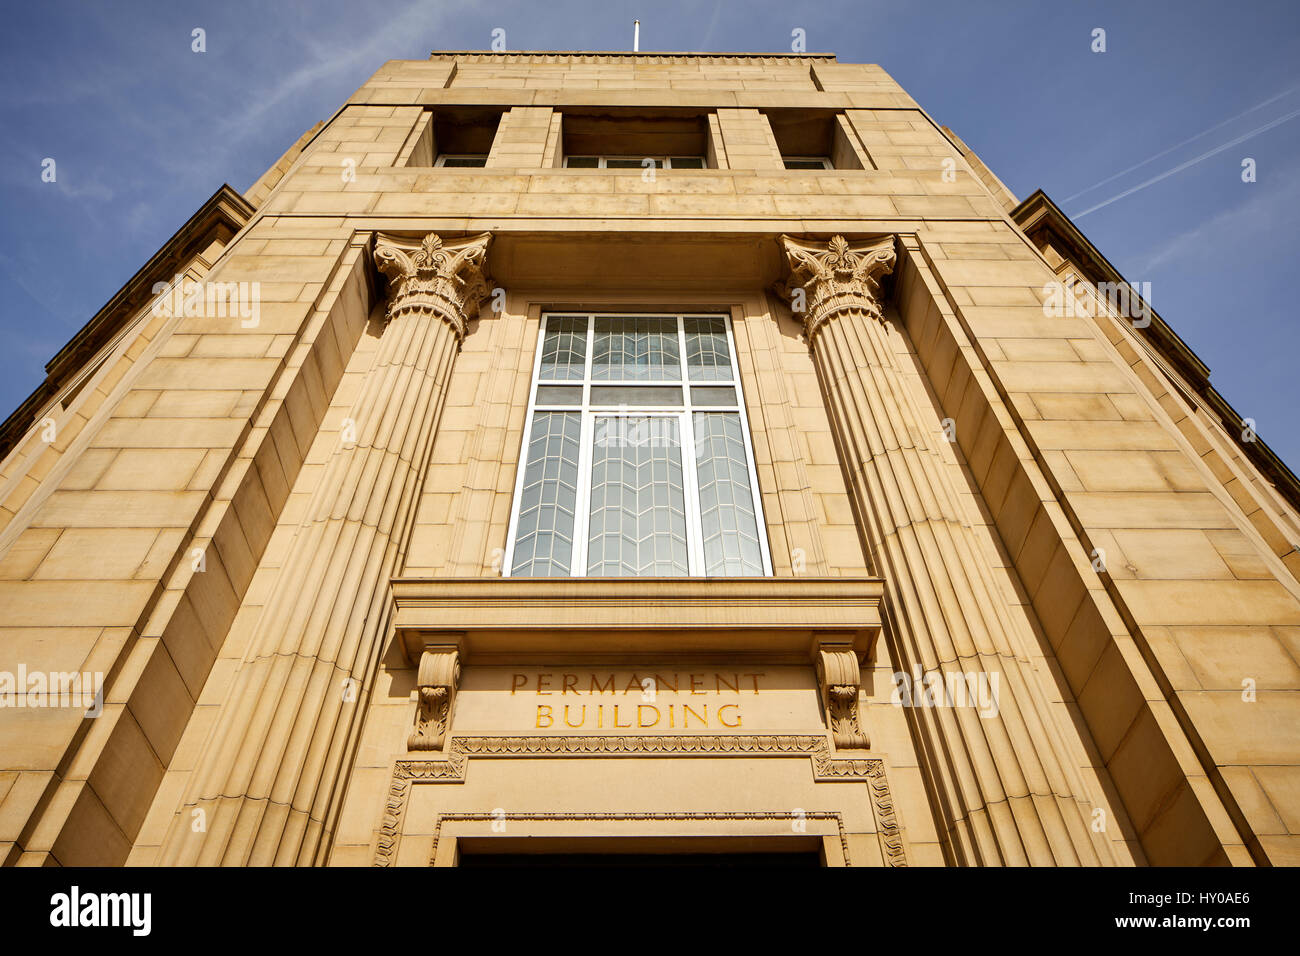 Bâtiment permanent, Regent Street, le centre-ville de Barnsley, South Yorkshire, Angleterre. UK. Banque D'Images